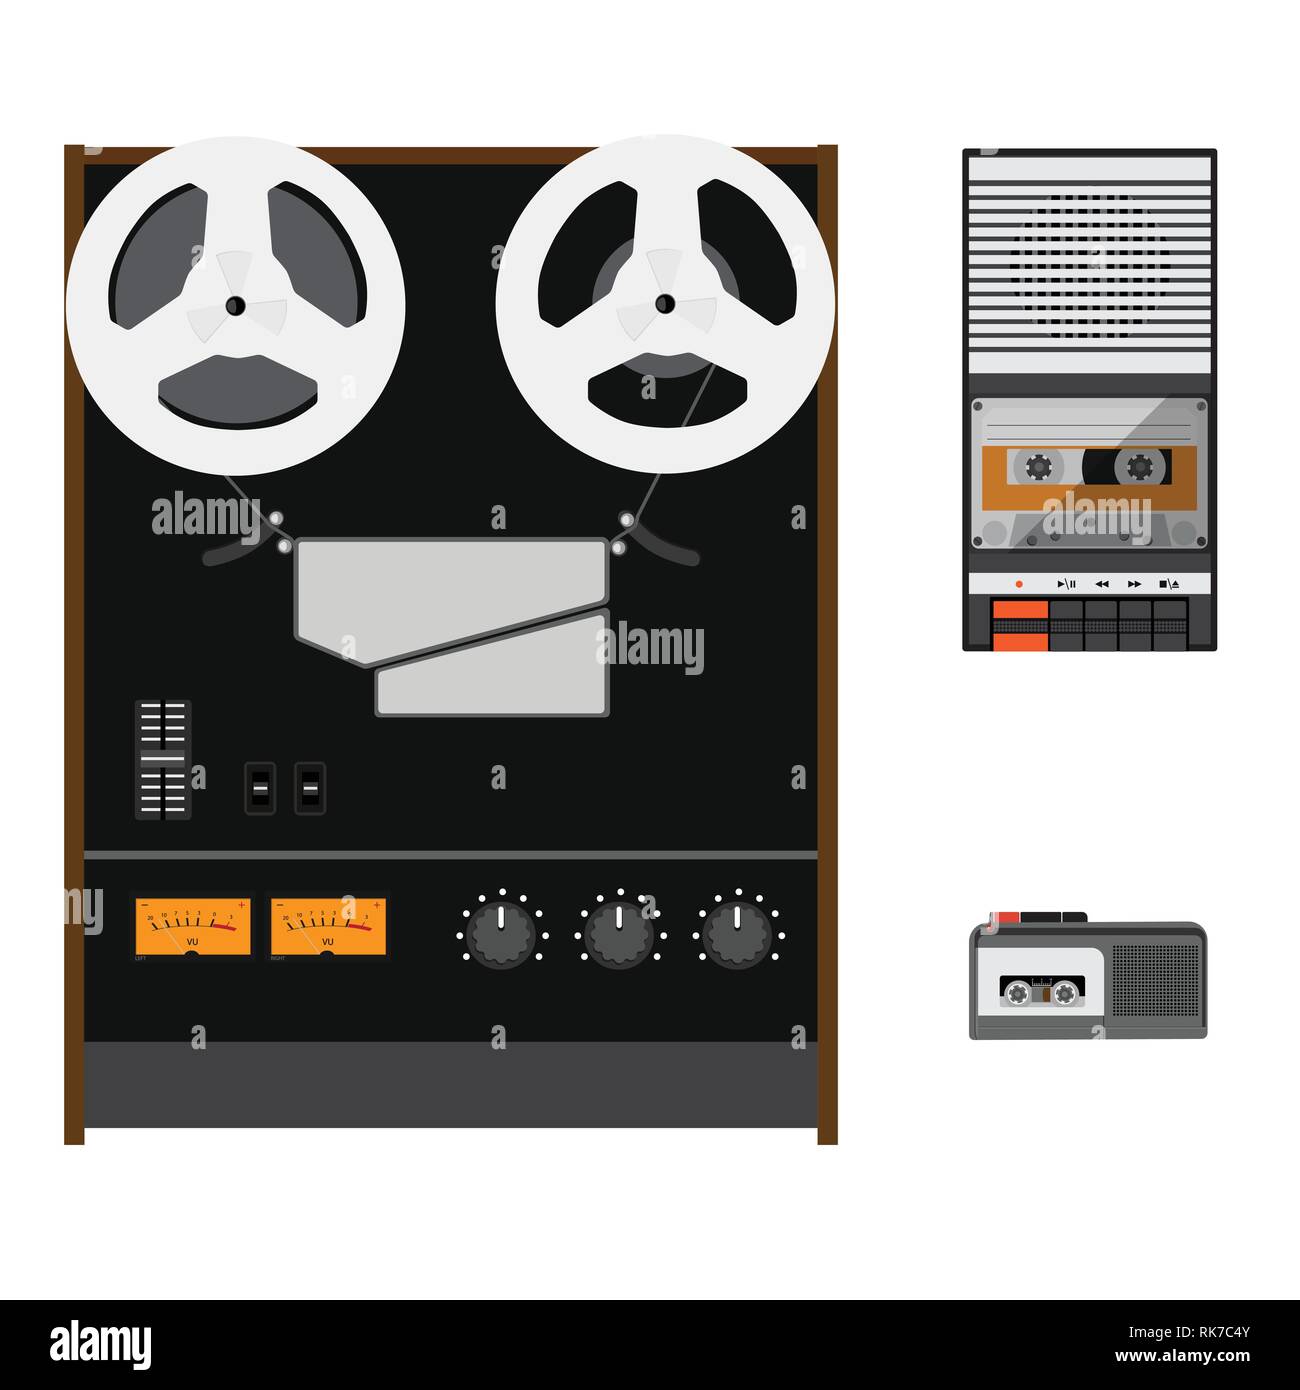 https://c8.alamy.com/comp/RK7C4Y/vector-illustration-vintage-audio-tape-recorder-reel-to-reel-tape-recorder-and-dictaphone-RK7C4Y.jpg